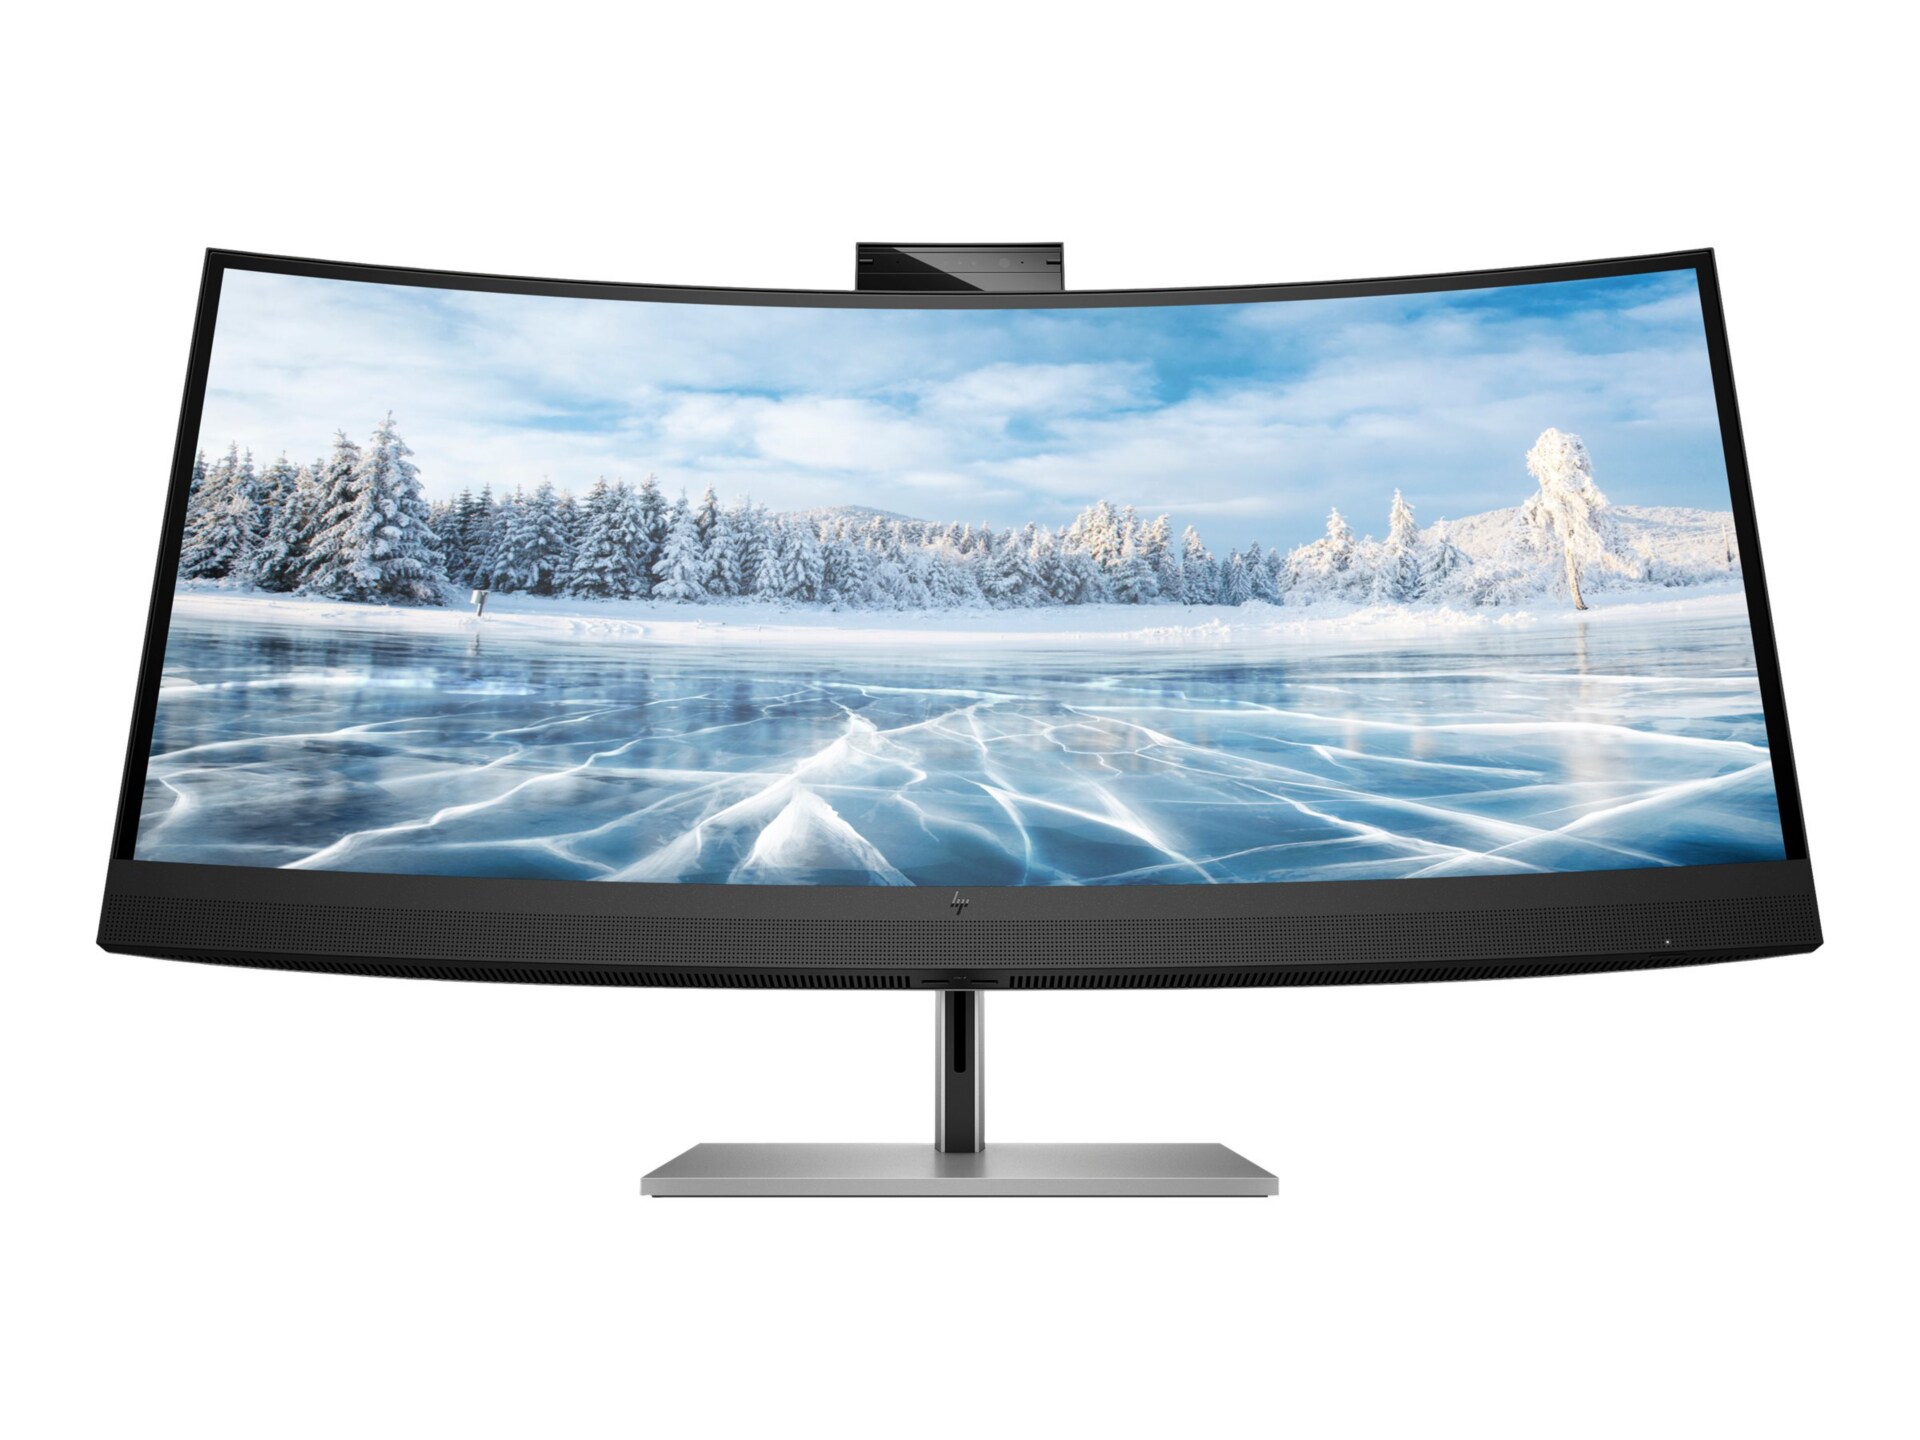 HP Z34c G3 34" Class Webcam WQHD Curved Screen LCD Monitor - 21:9 - Silver, Black